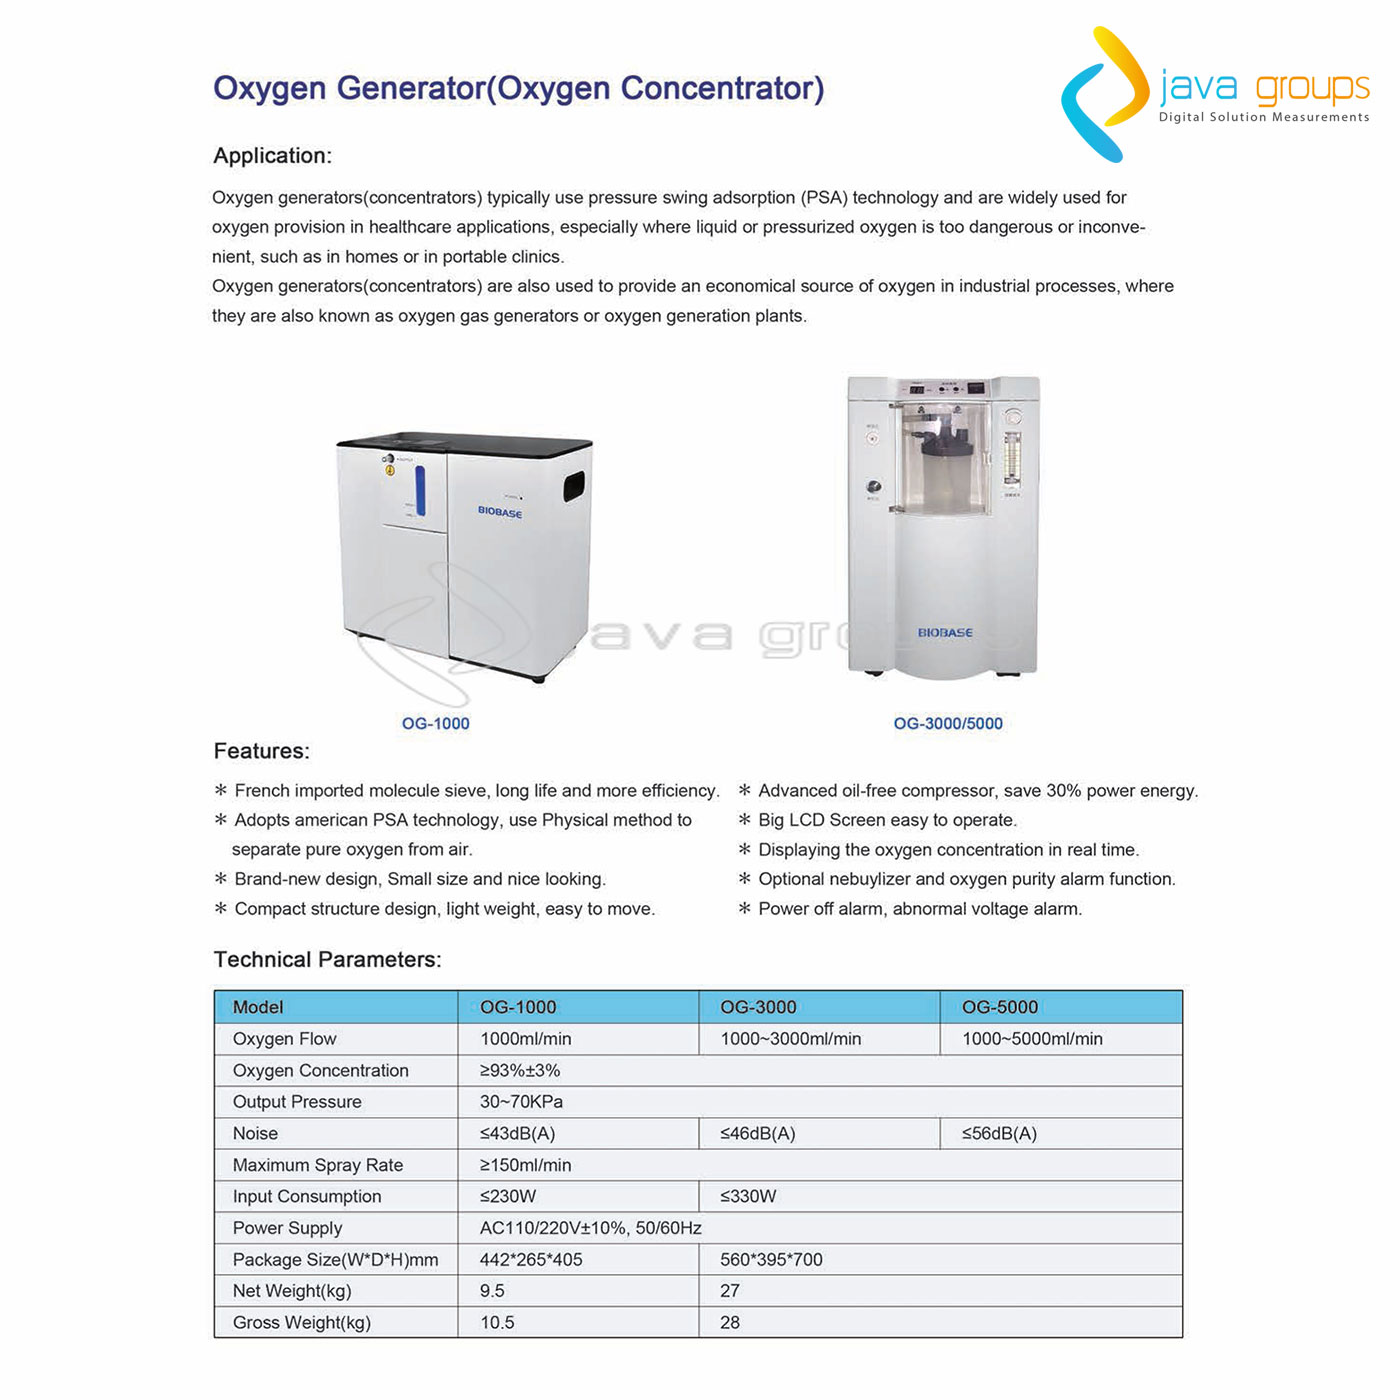 Alat Generator Oksigen Biobase (Oxygen Concetrator) Series